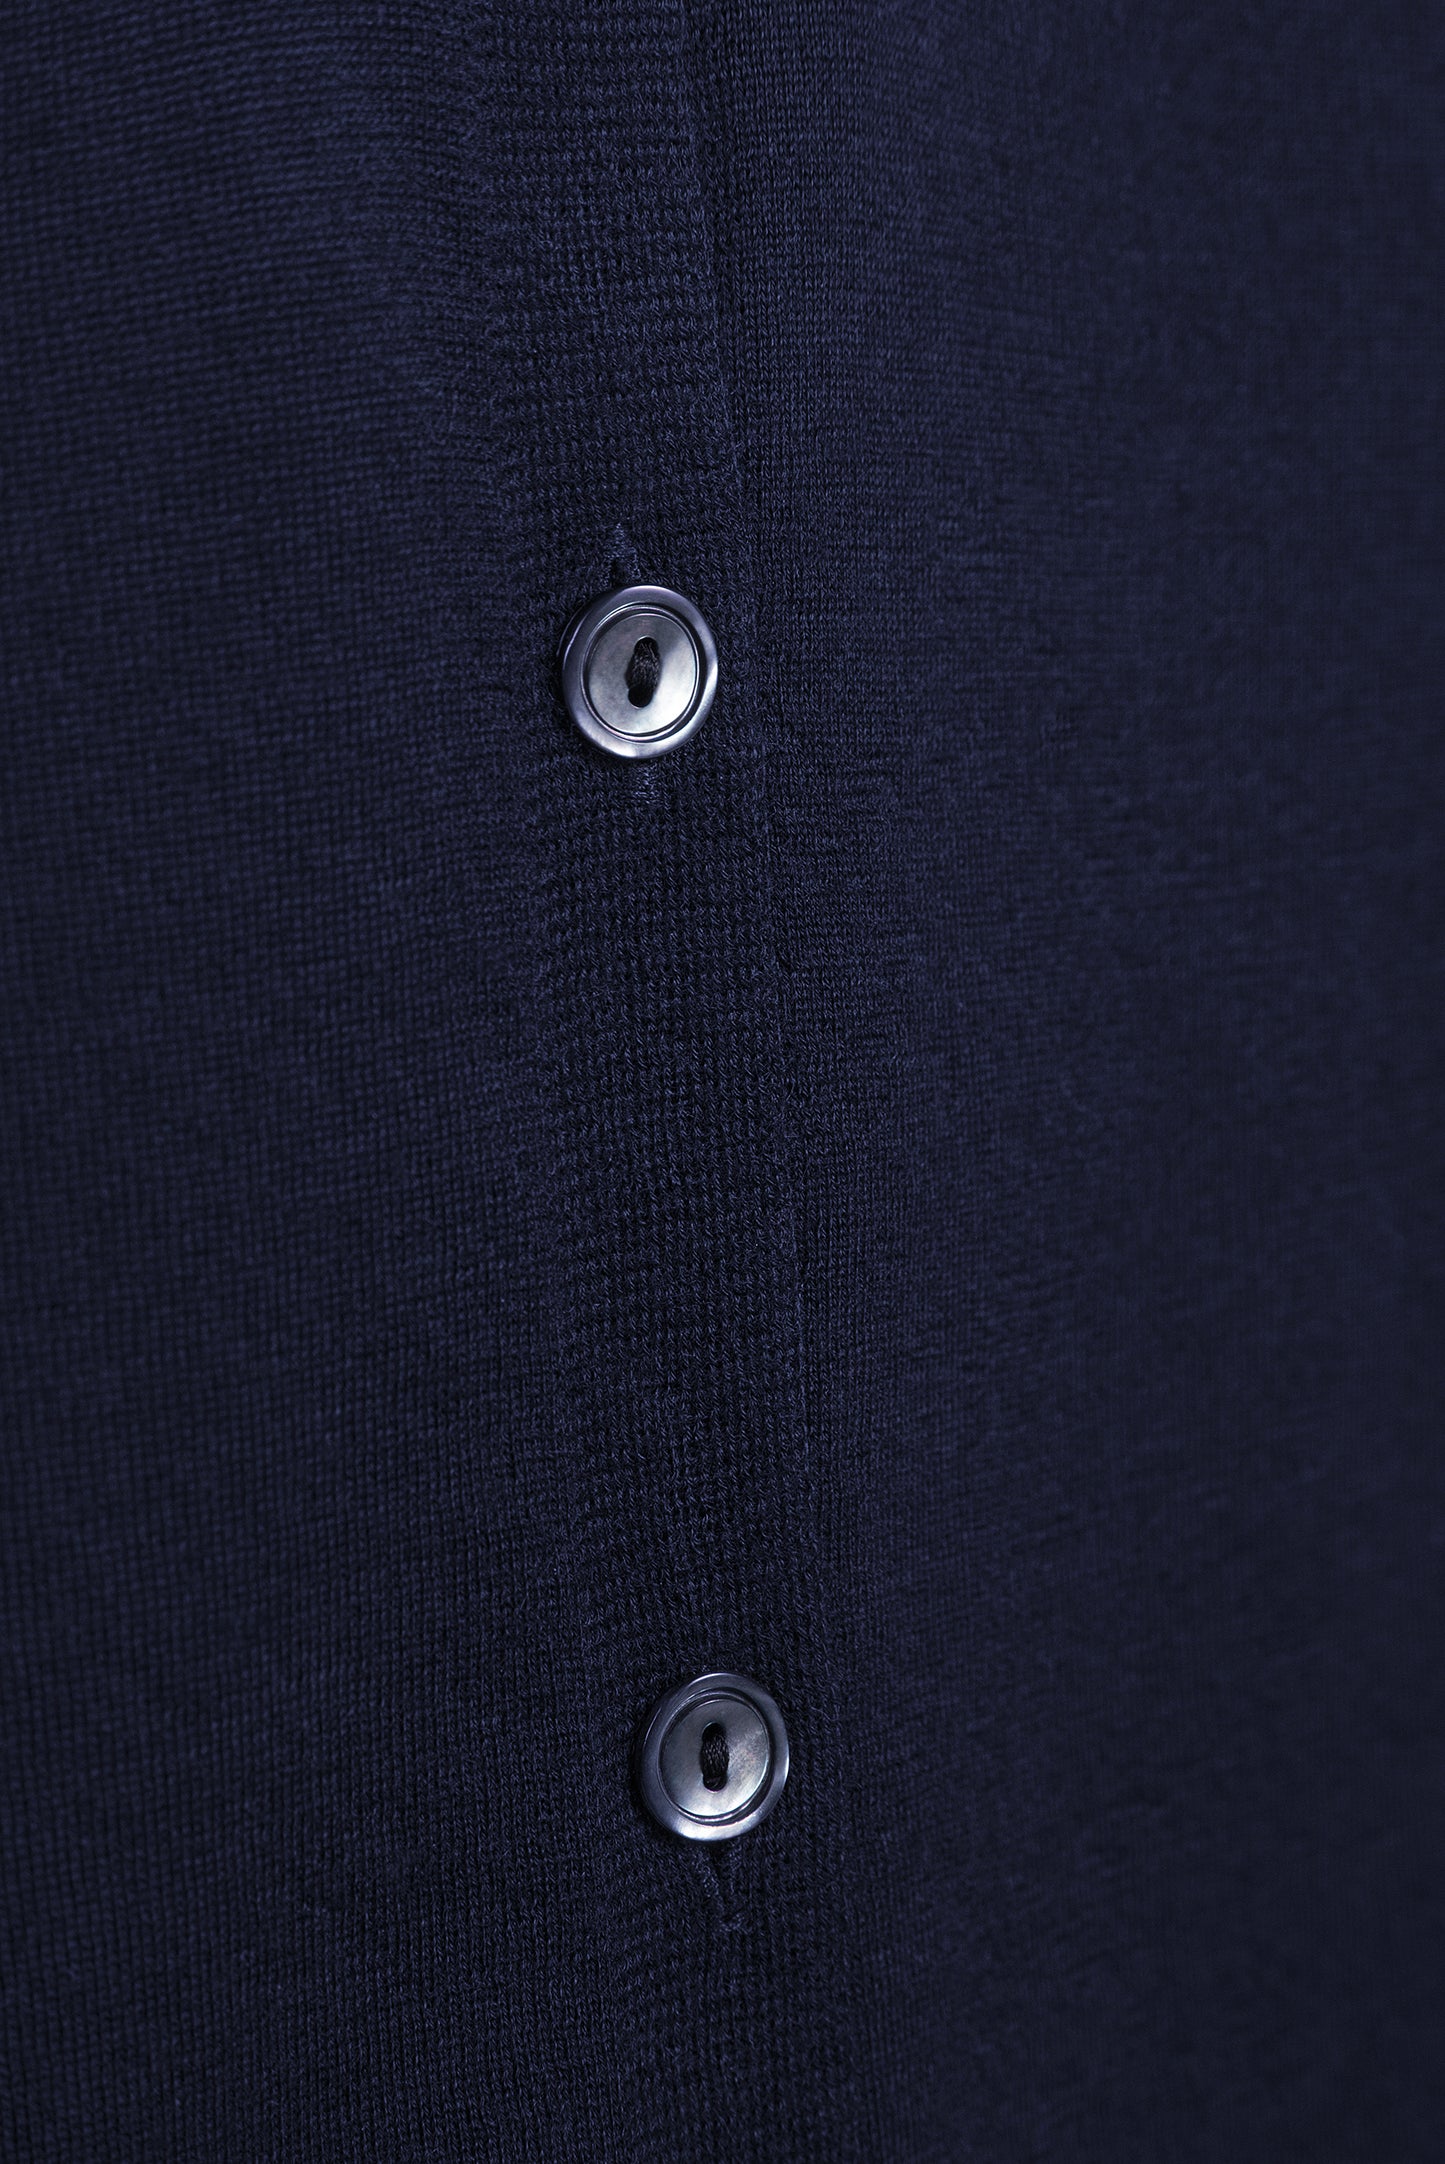 Atelier Verdi Midnight Blue Carolina Cashmere Cardigan Button Detail 